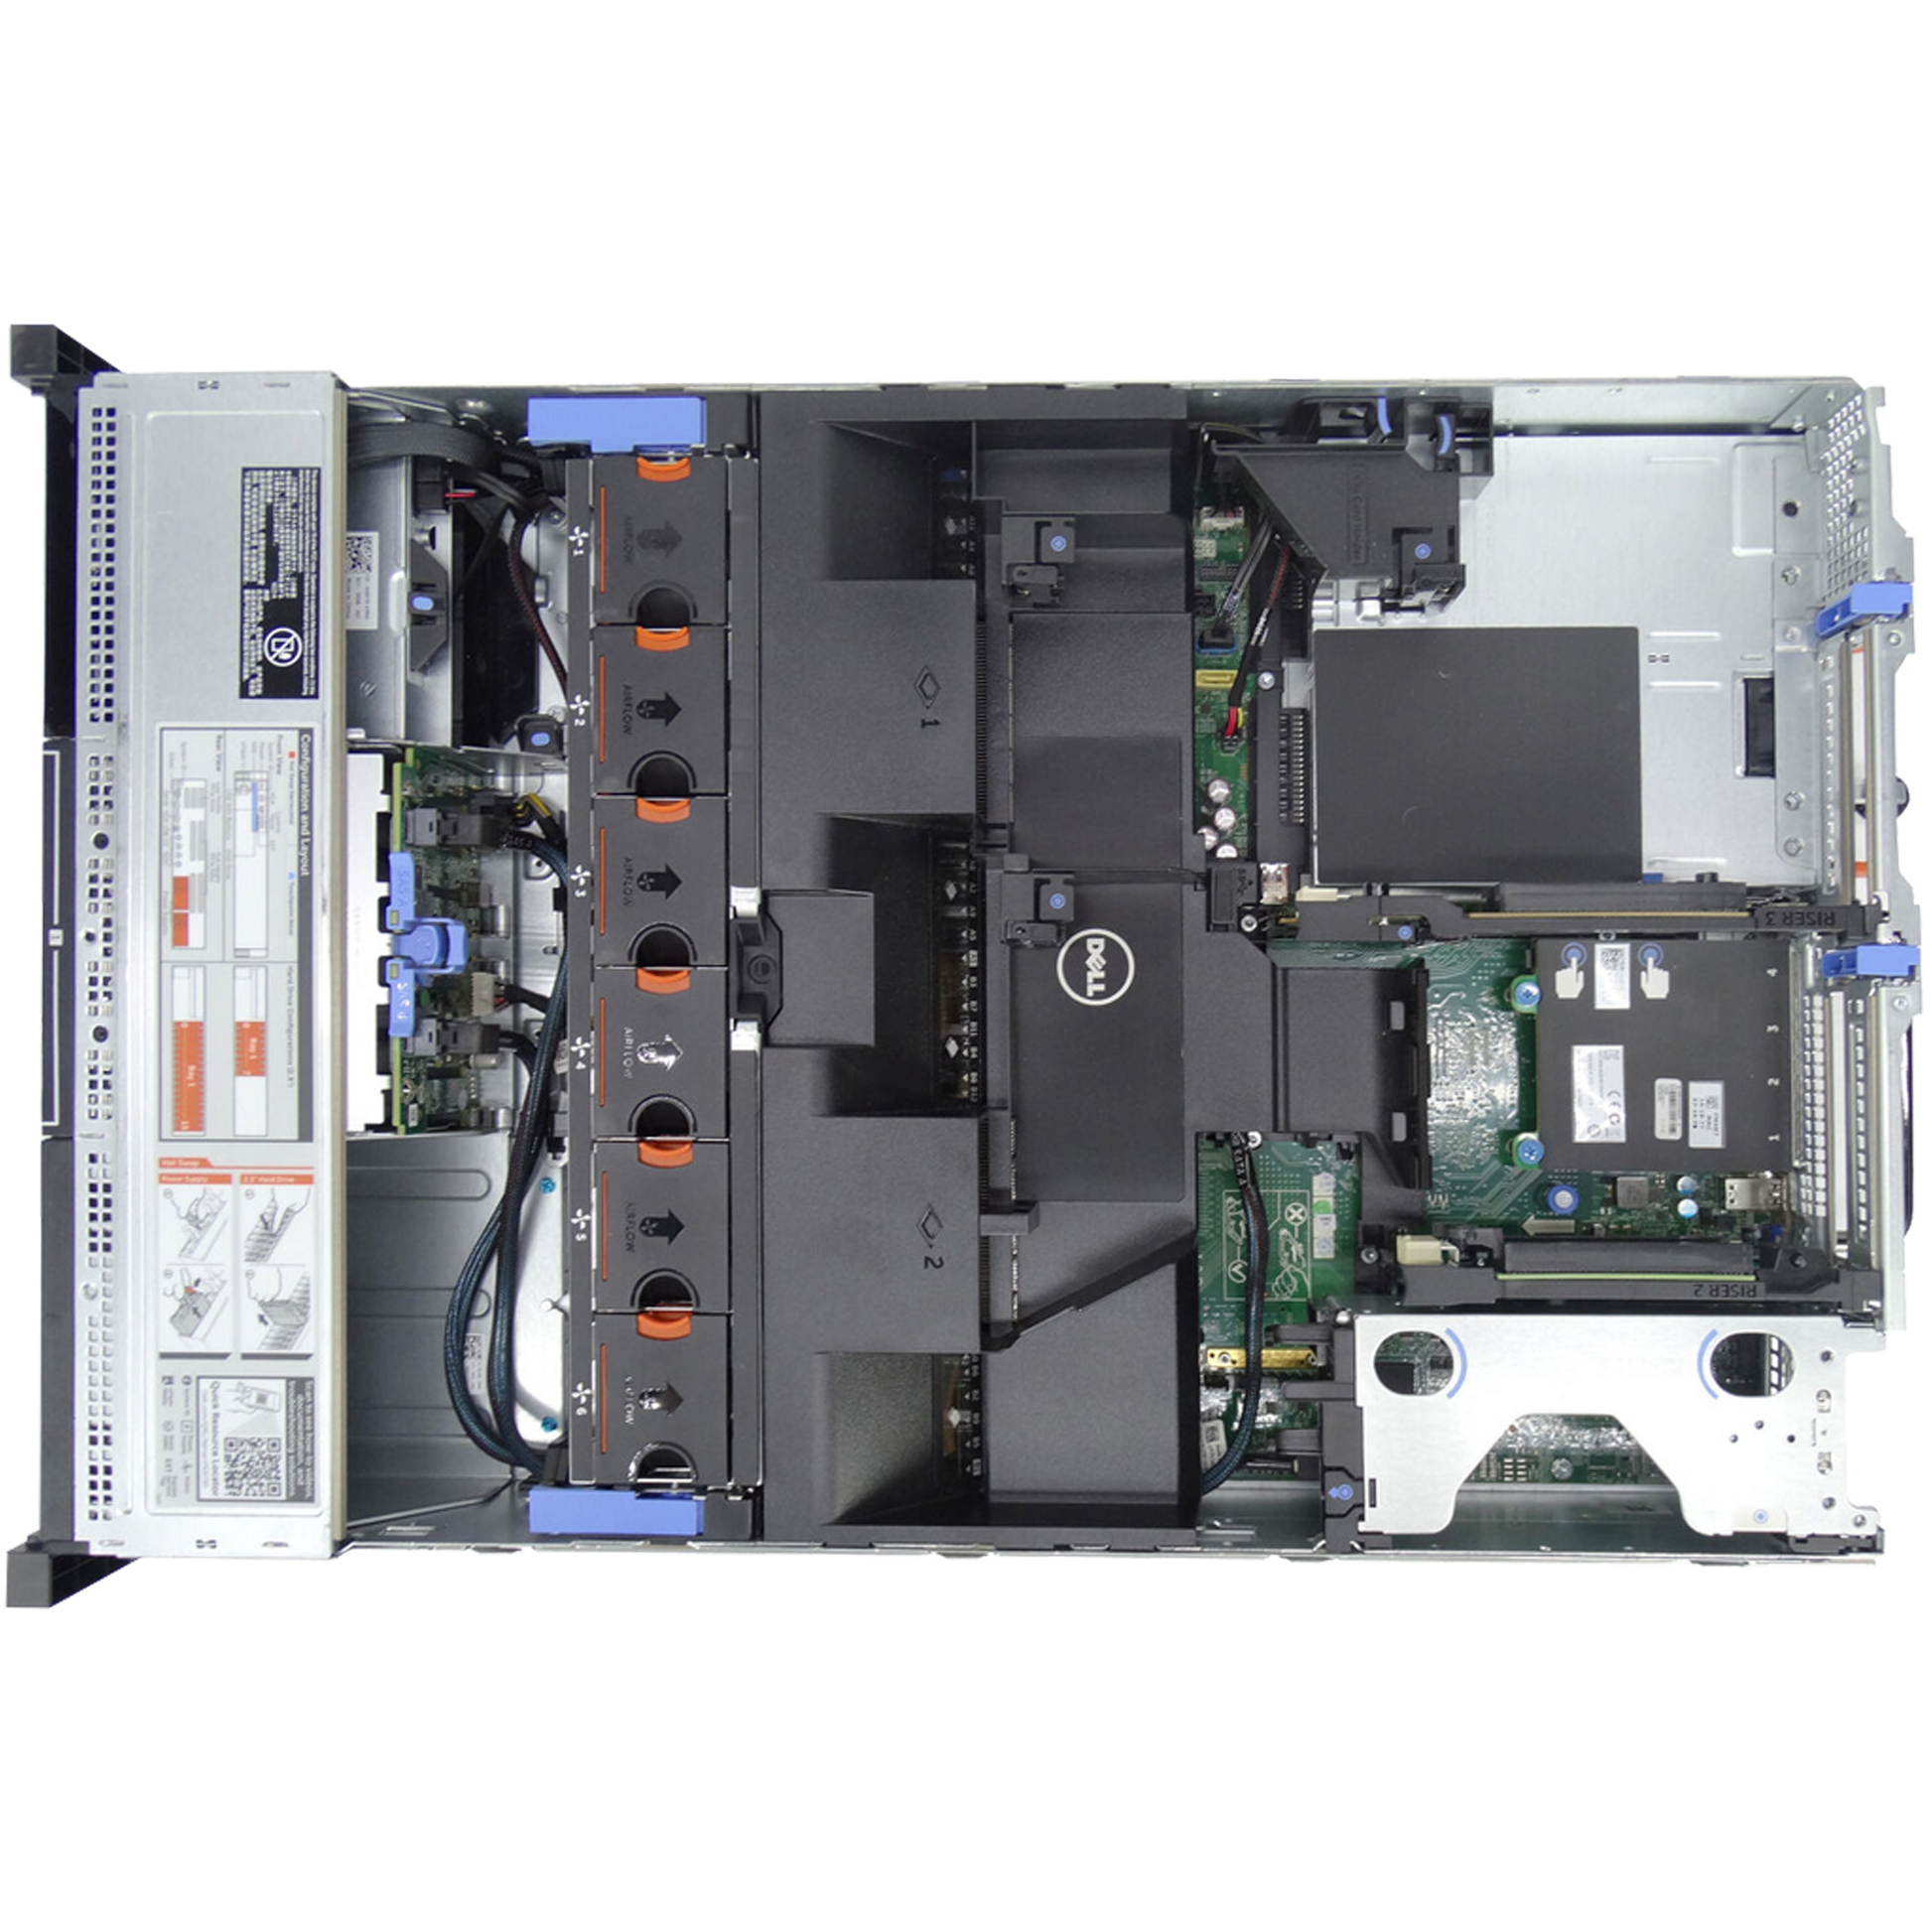 Dell PowerEdge R730 2 x 12 Core Intel Xeon CPU Server - 2.5" Backplane Servers